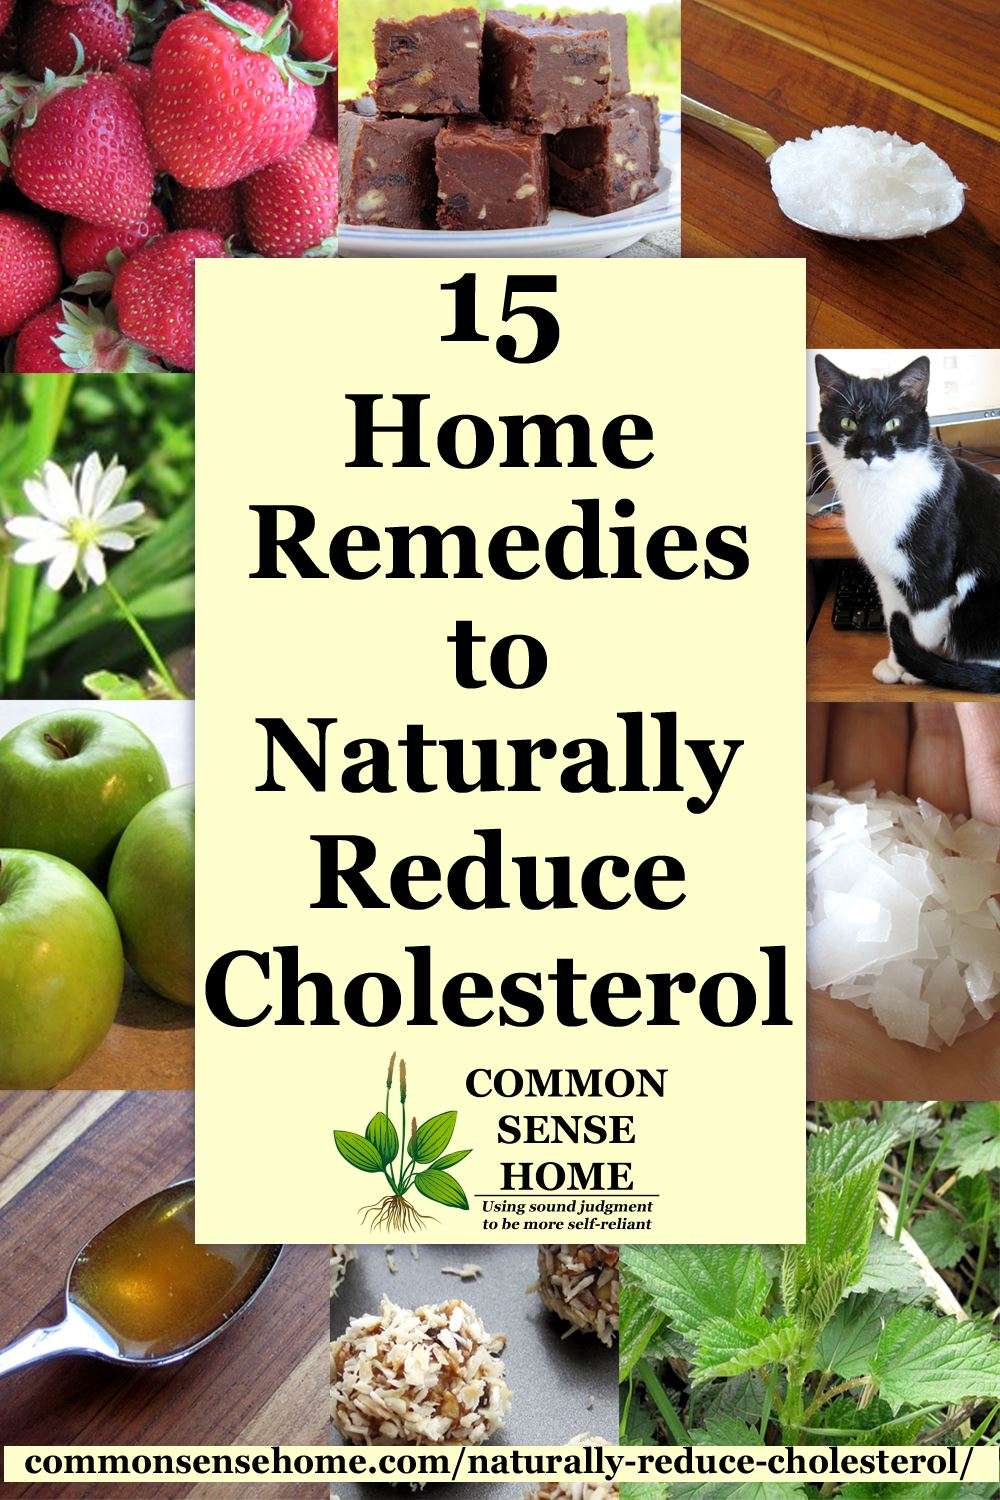 Foods That Help Lower Cholesterol